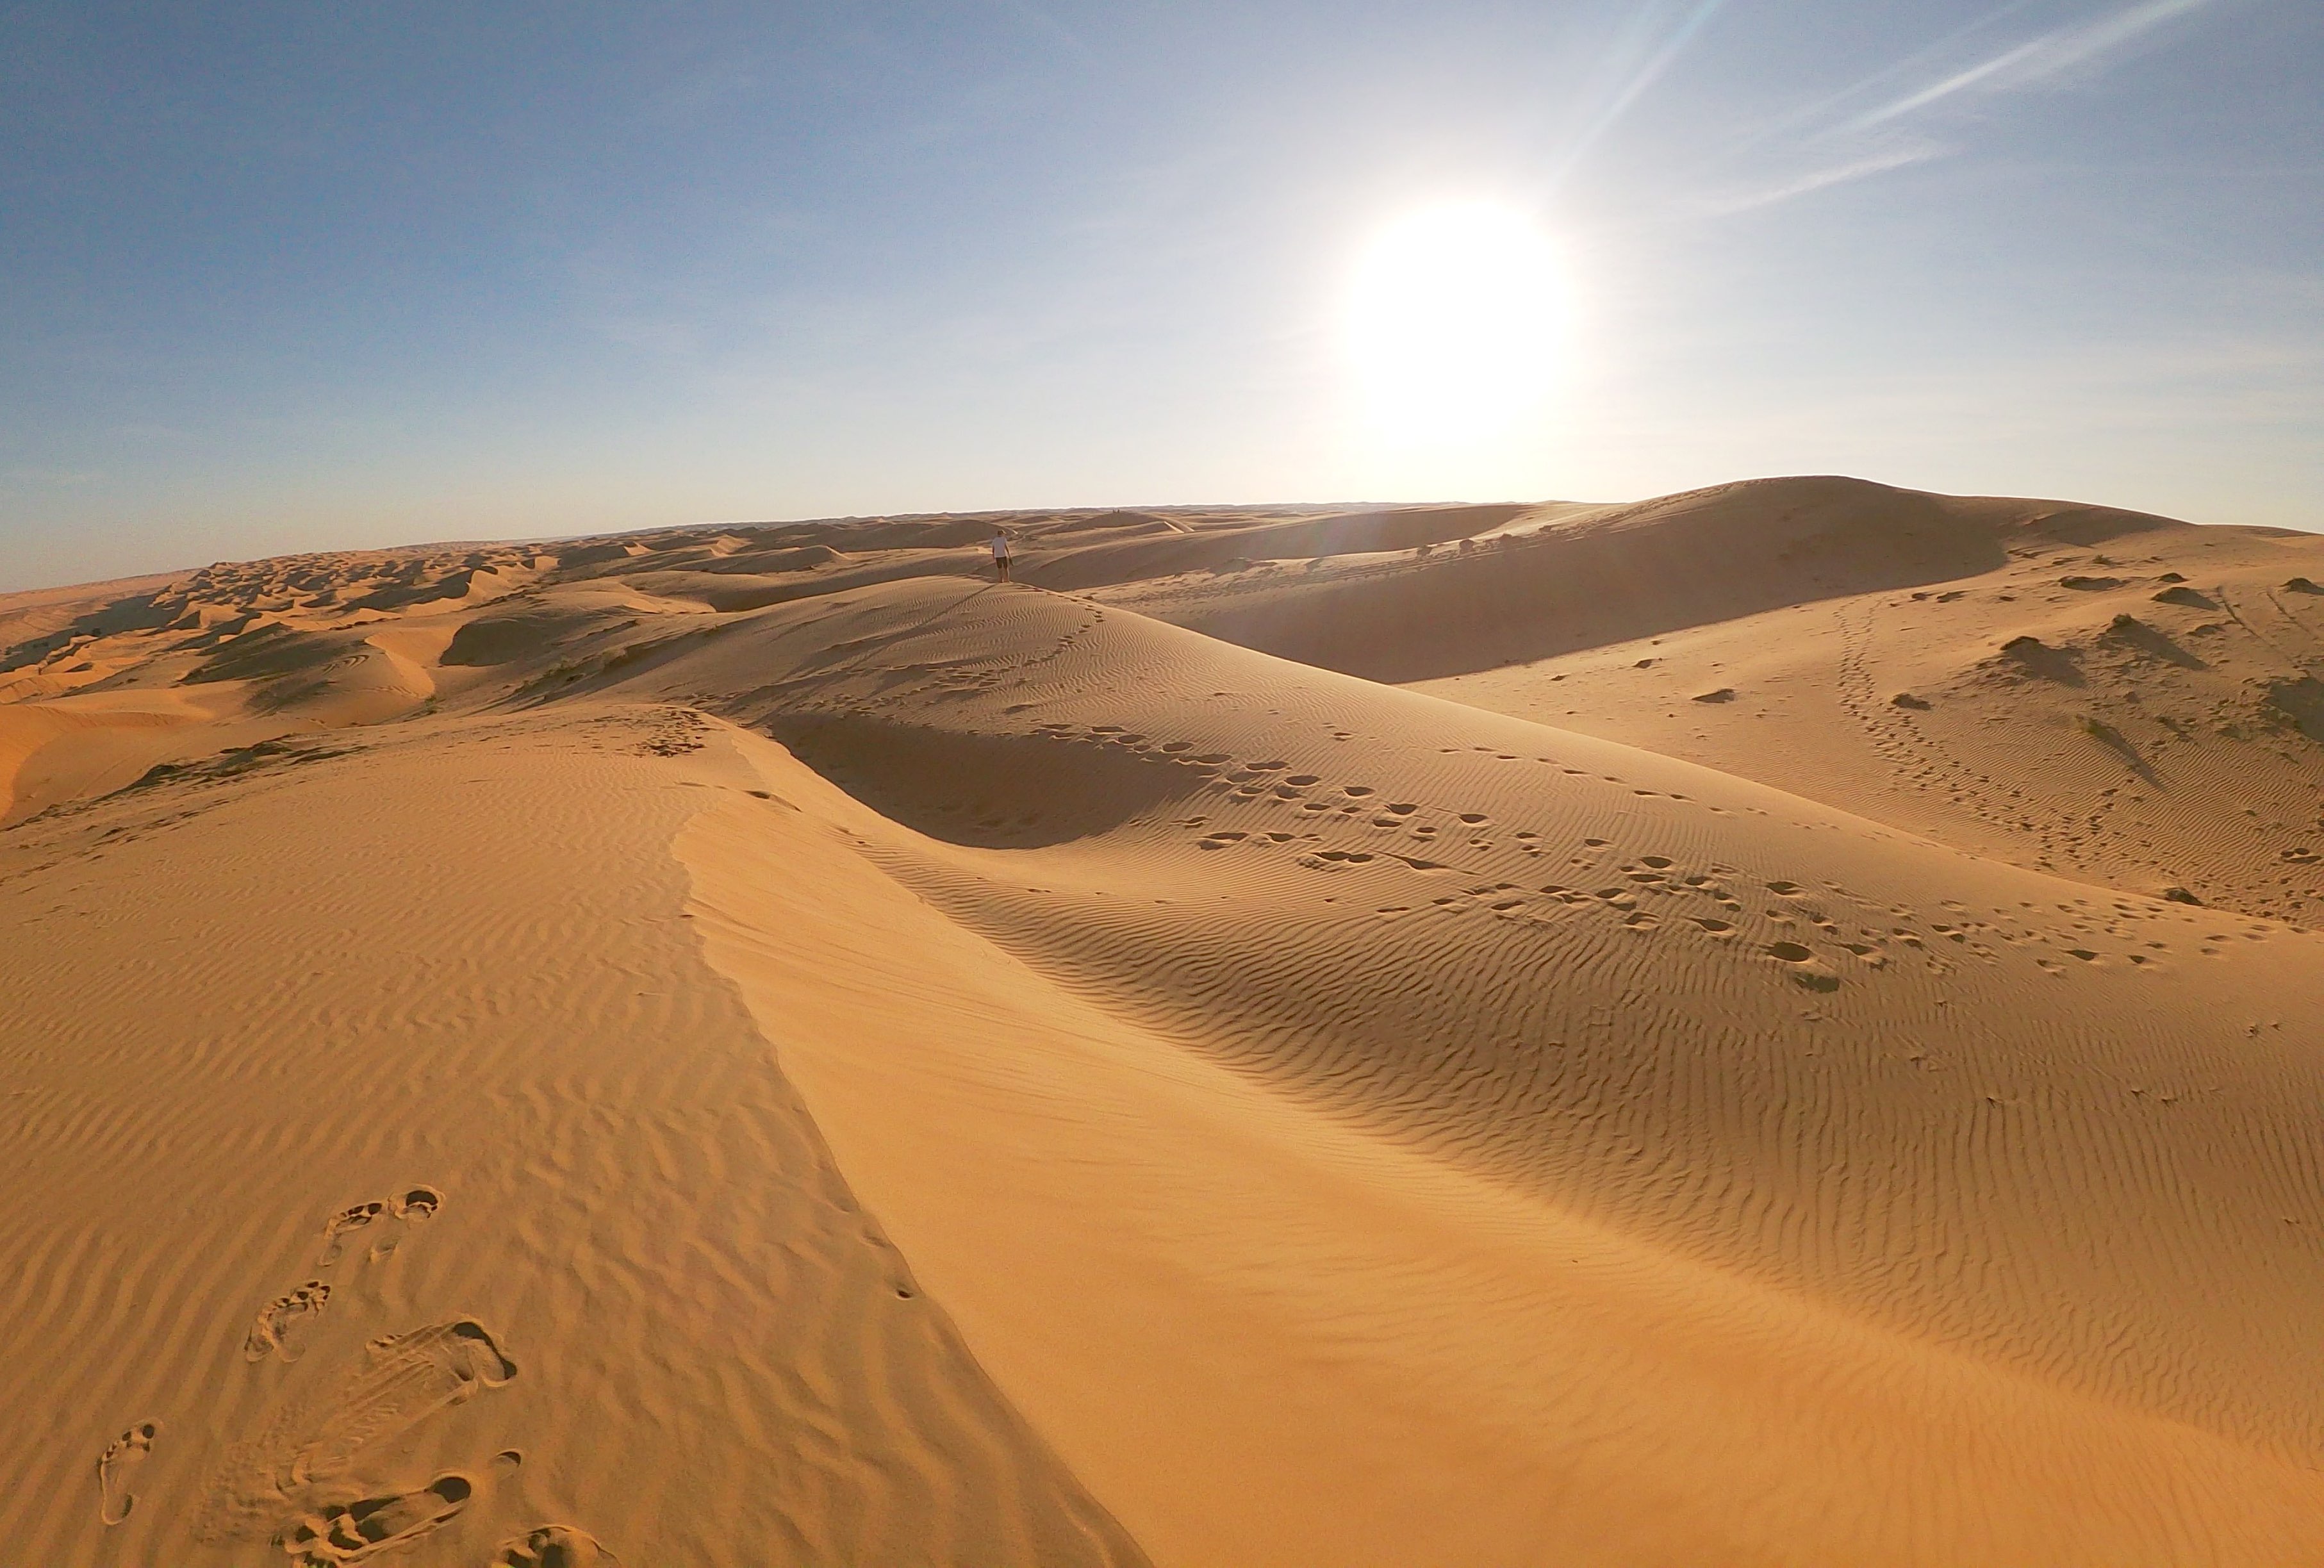 desert wahiba sands, oman